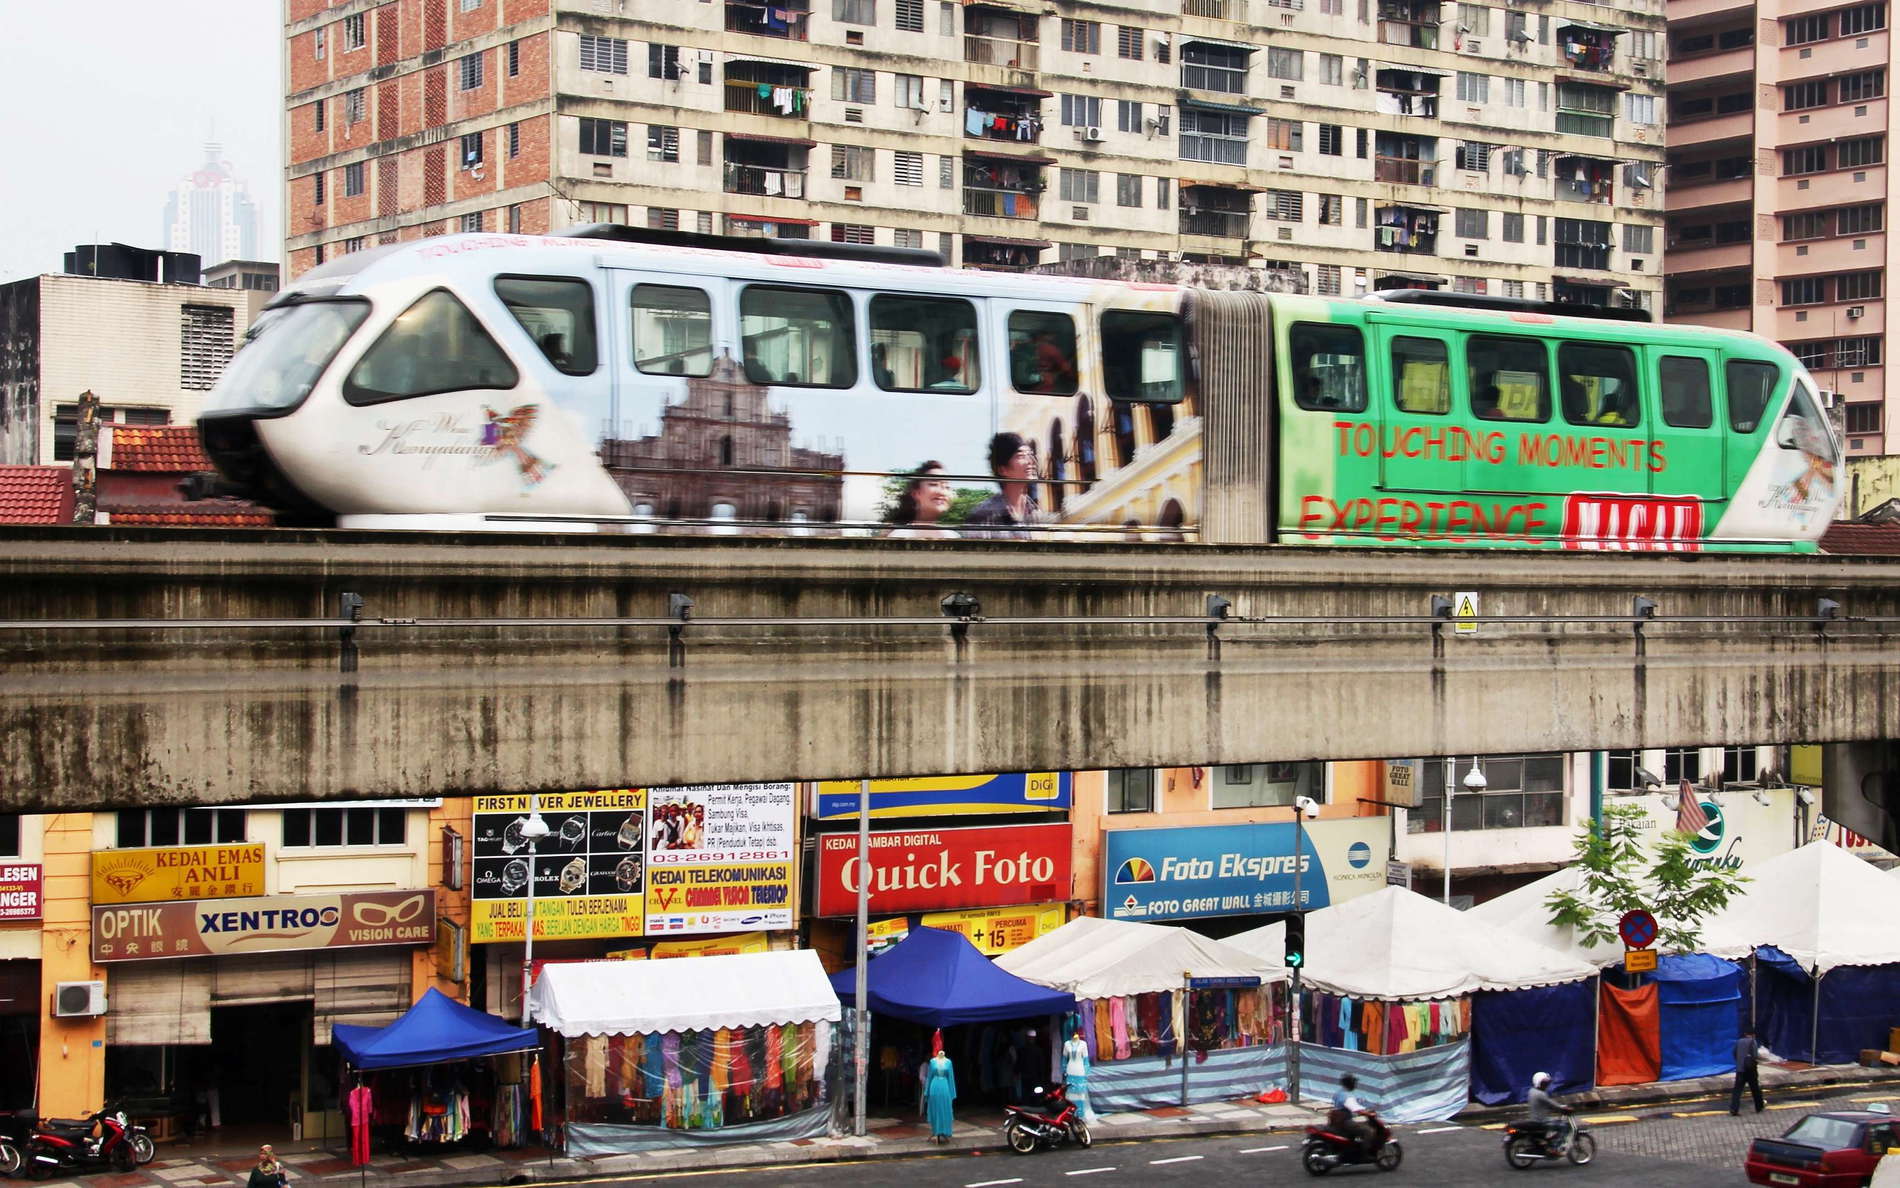 Kuala Lumpur  |  Chow Kit with KL Monorail